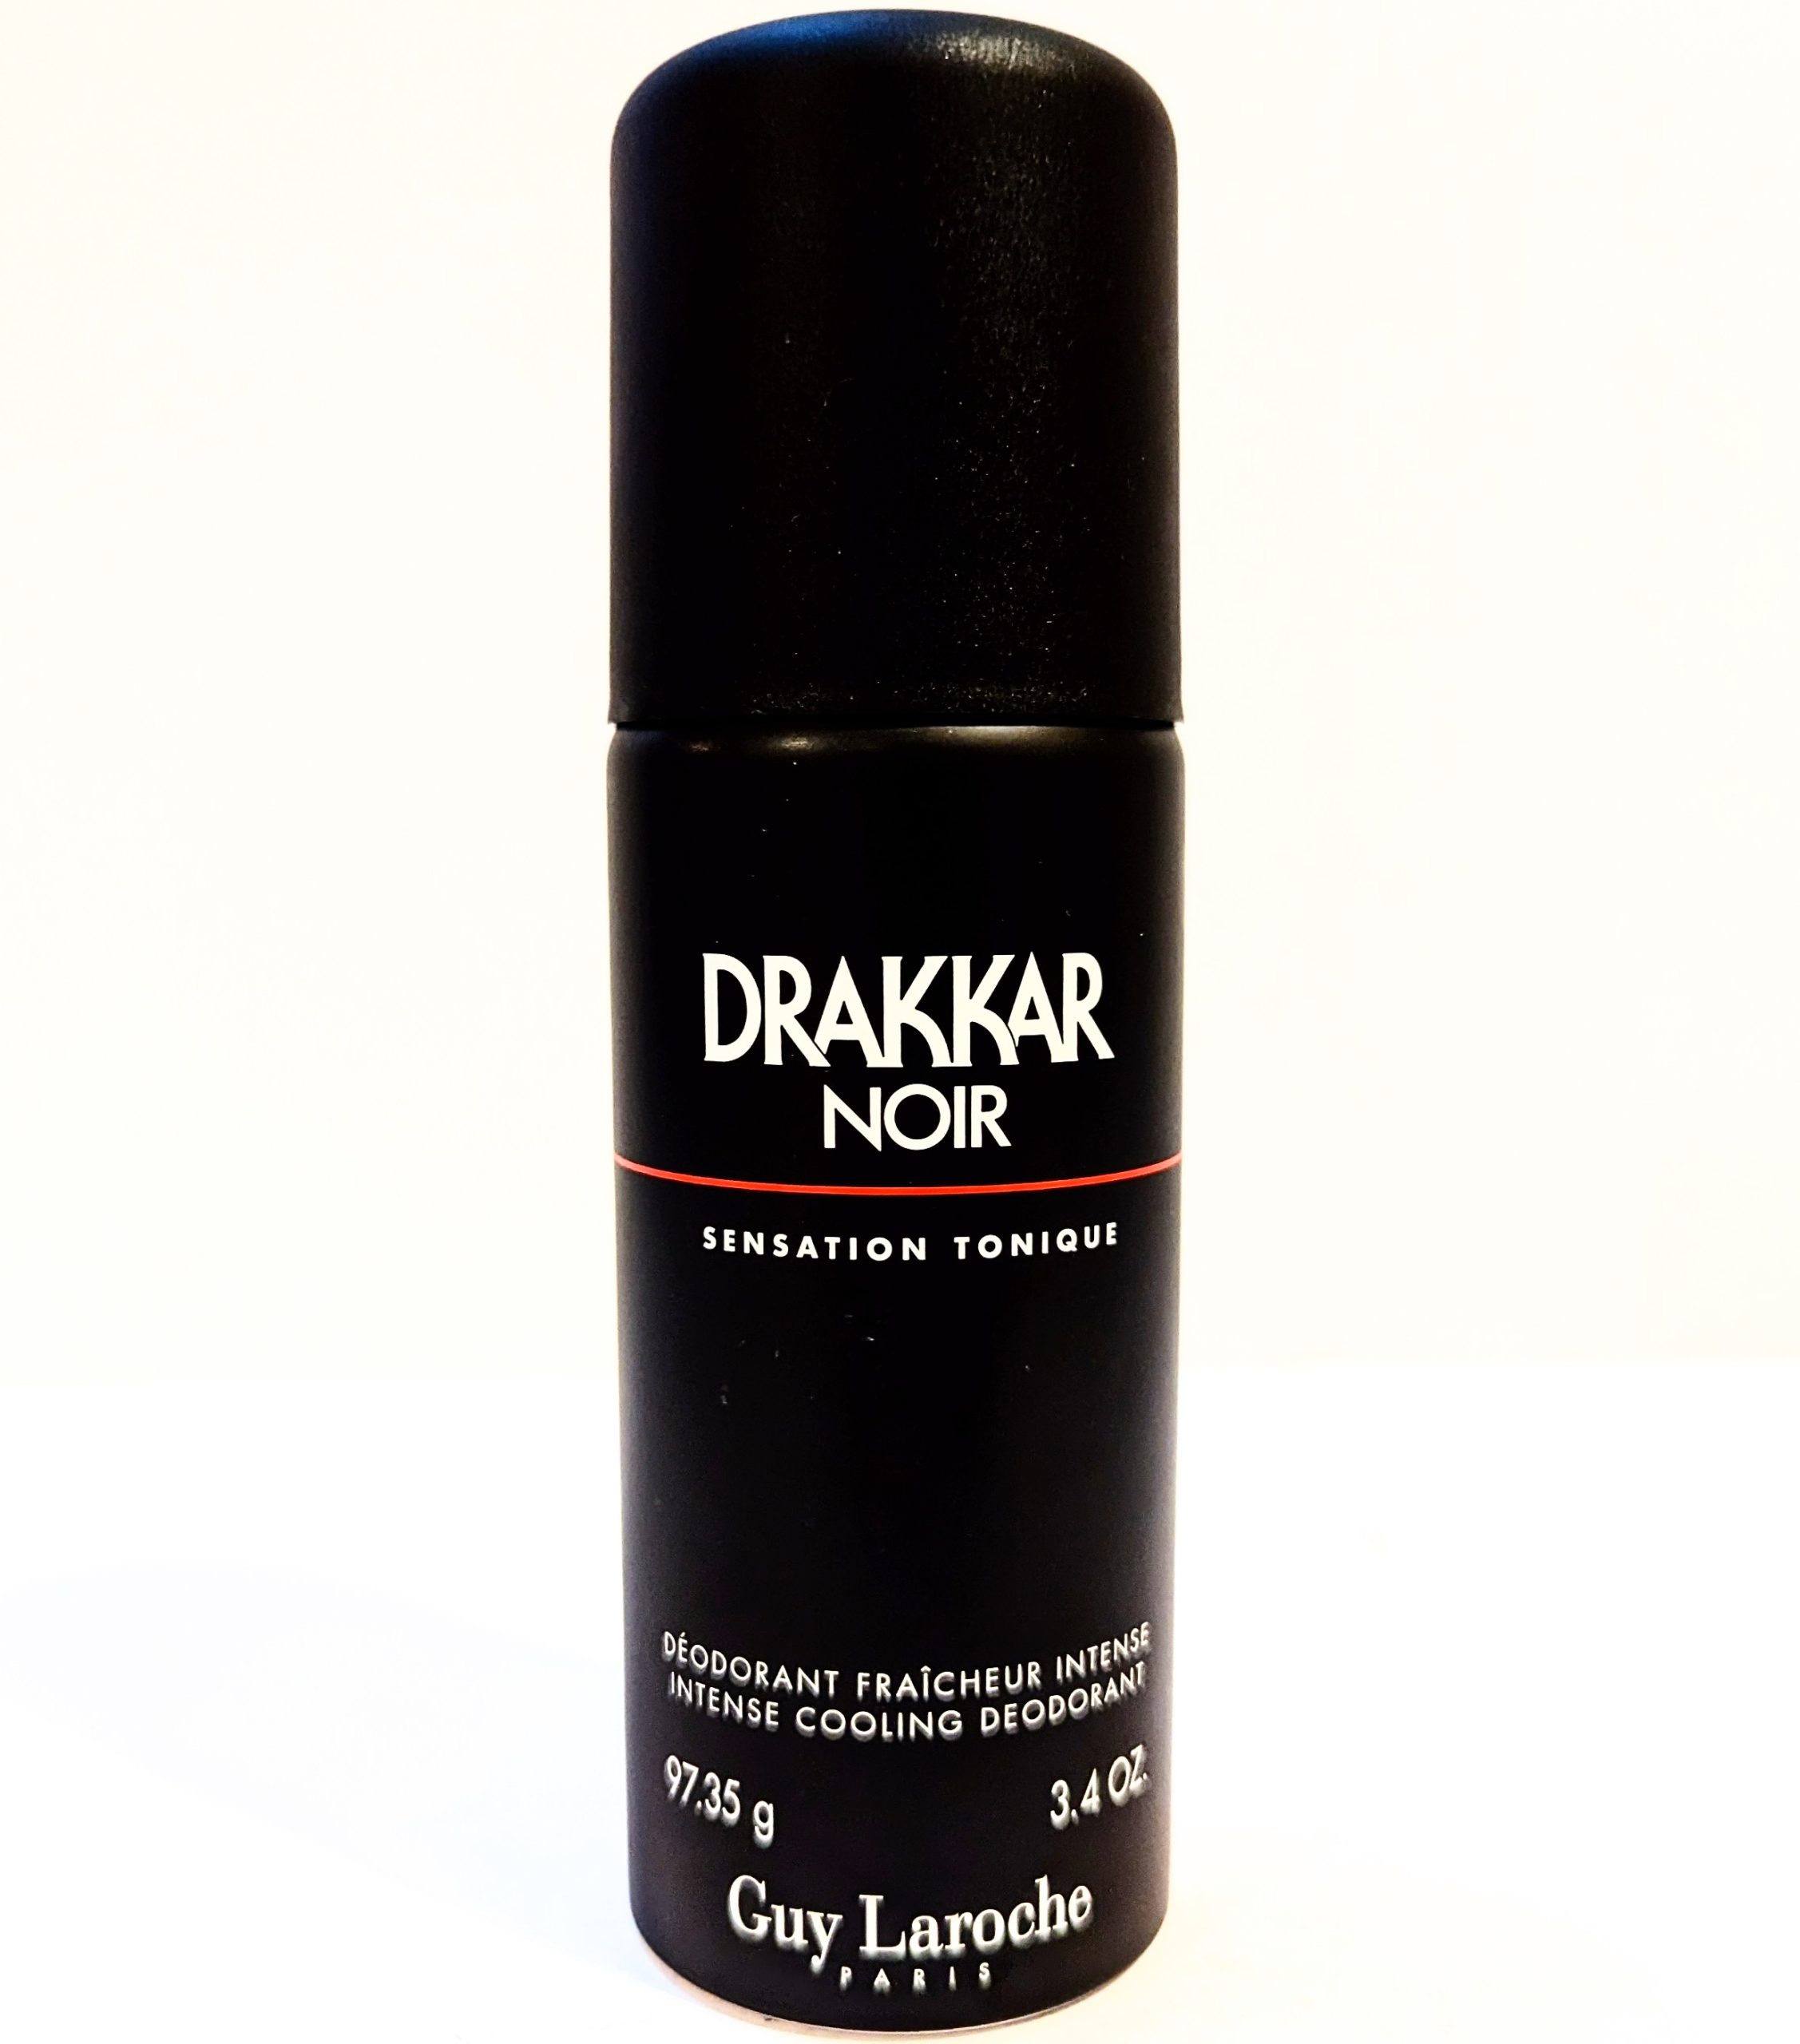 Drakar noir deodorant spray.